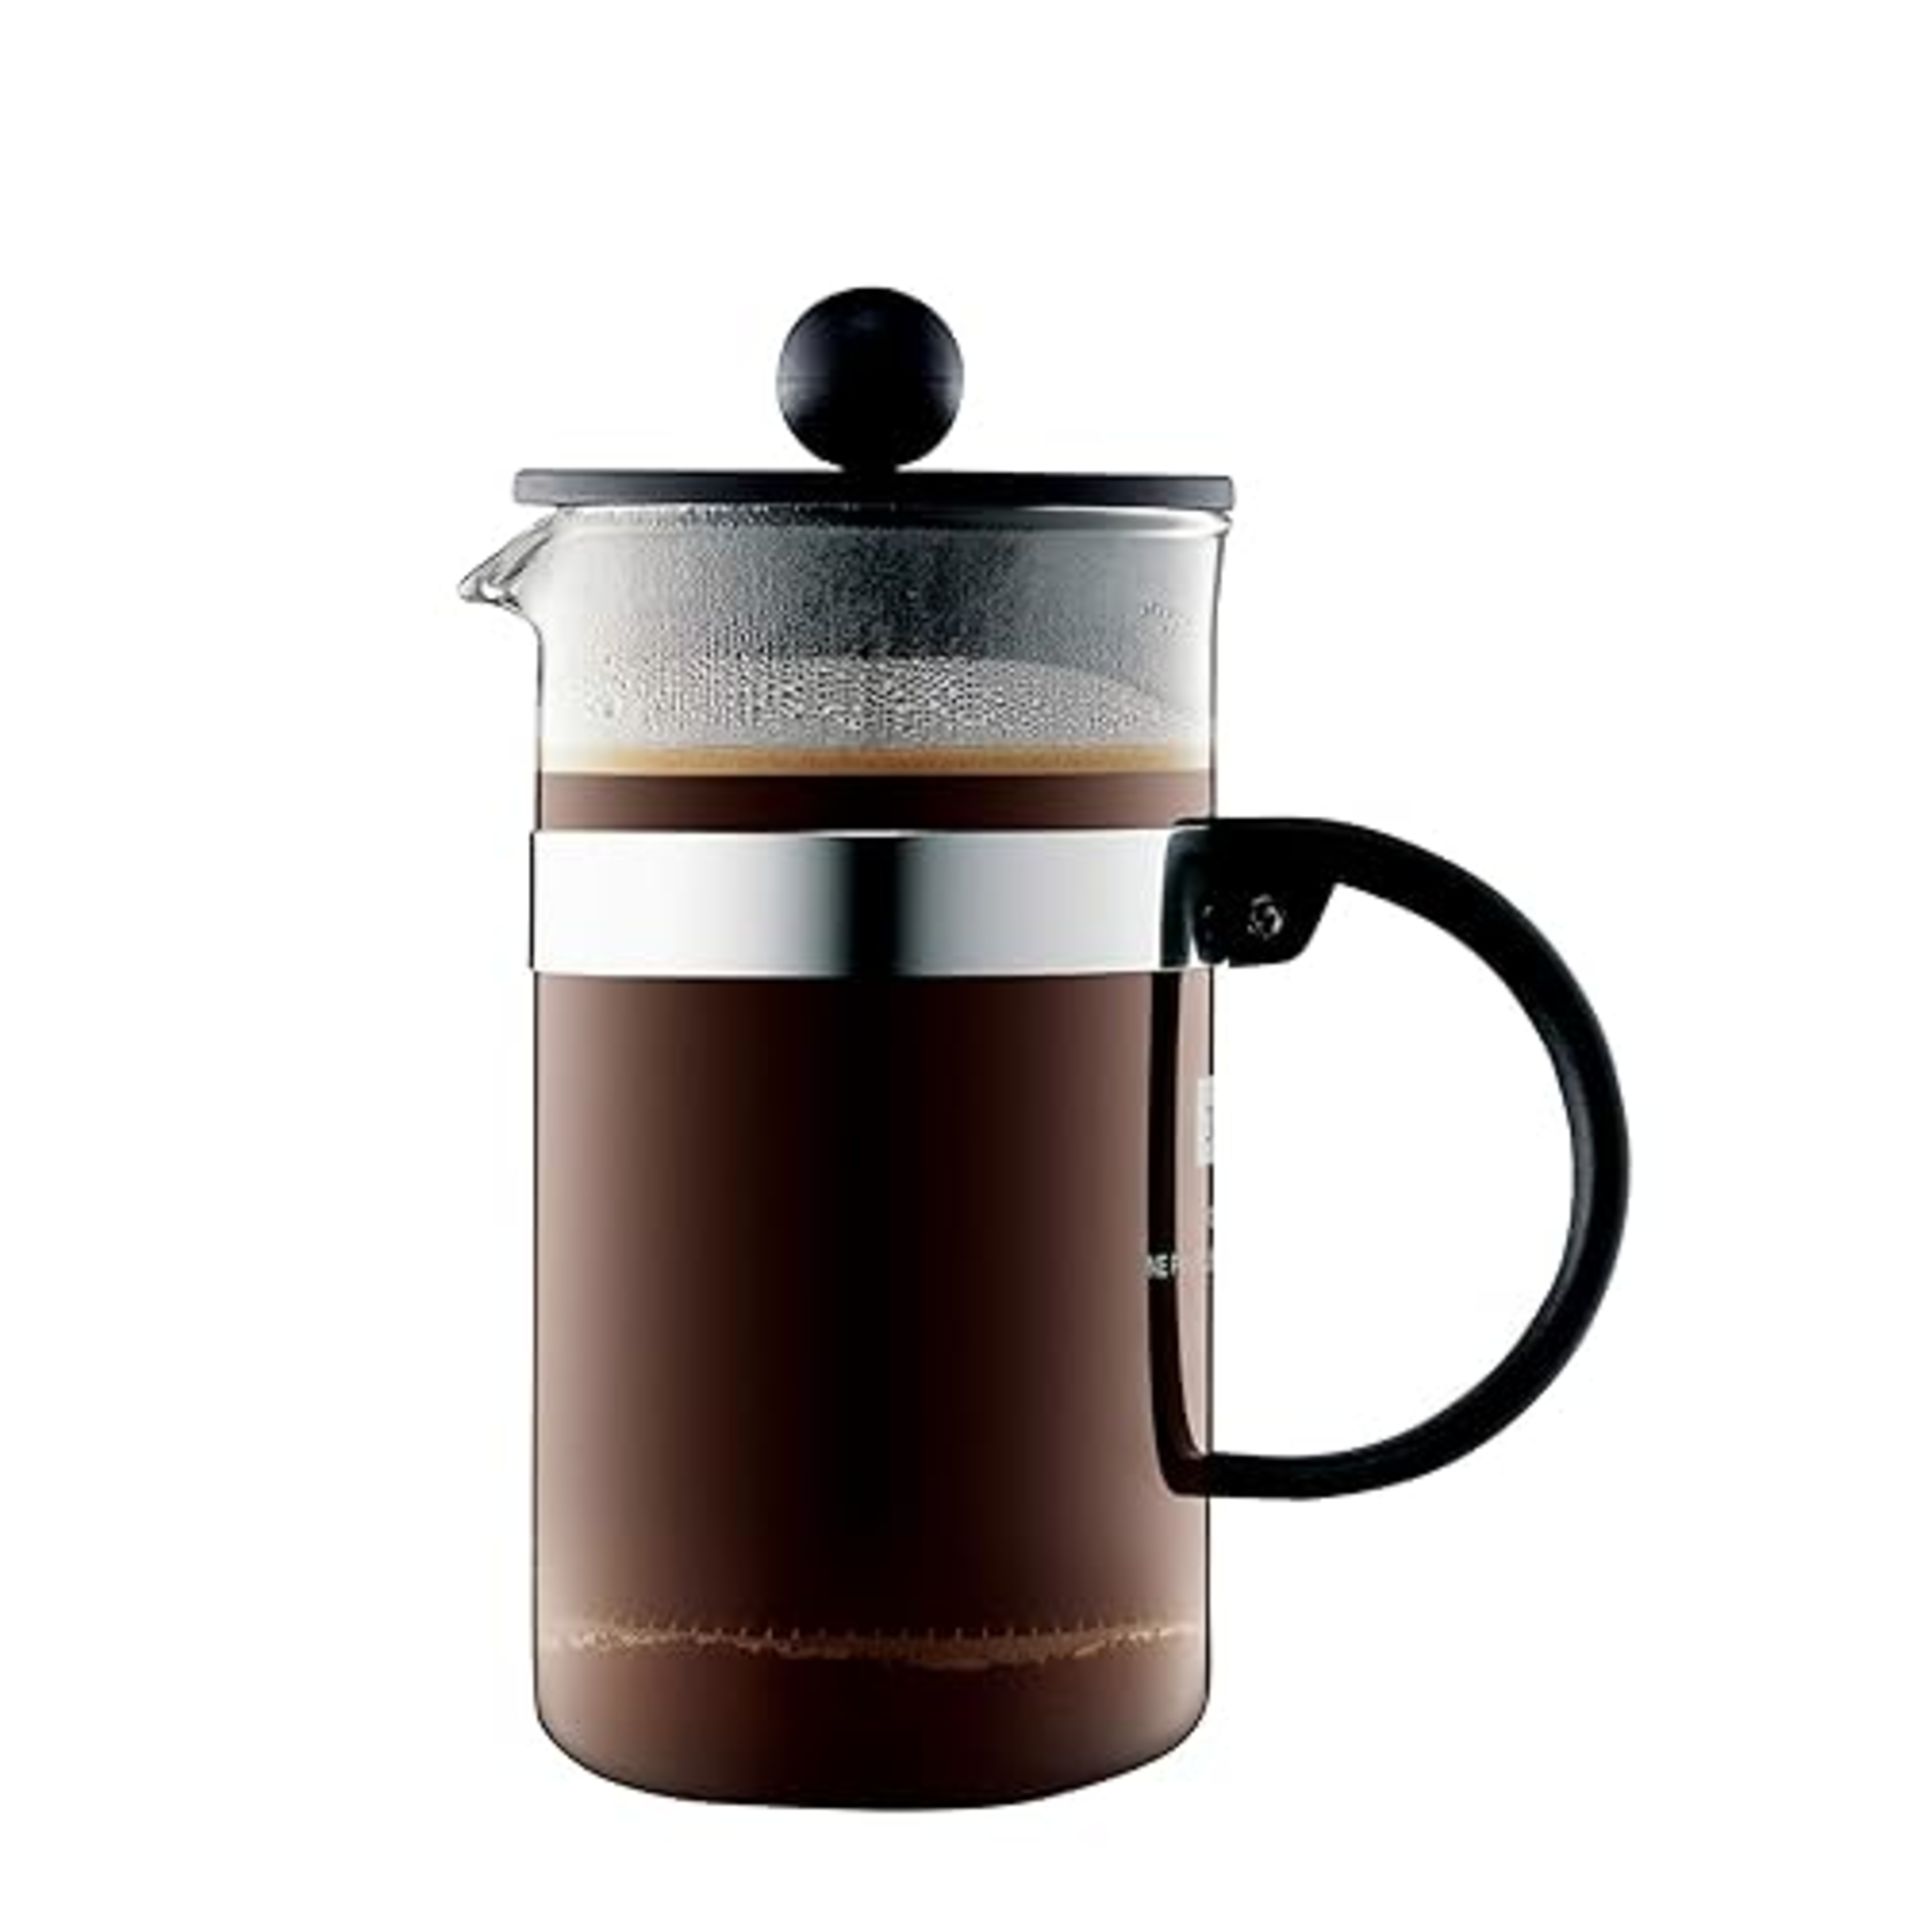 Bodum Bistro Nouveau 3 Cup French Press Coffee Maker, Black, 0.35 l, 12 oz